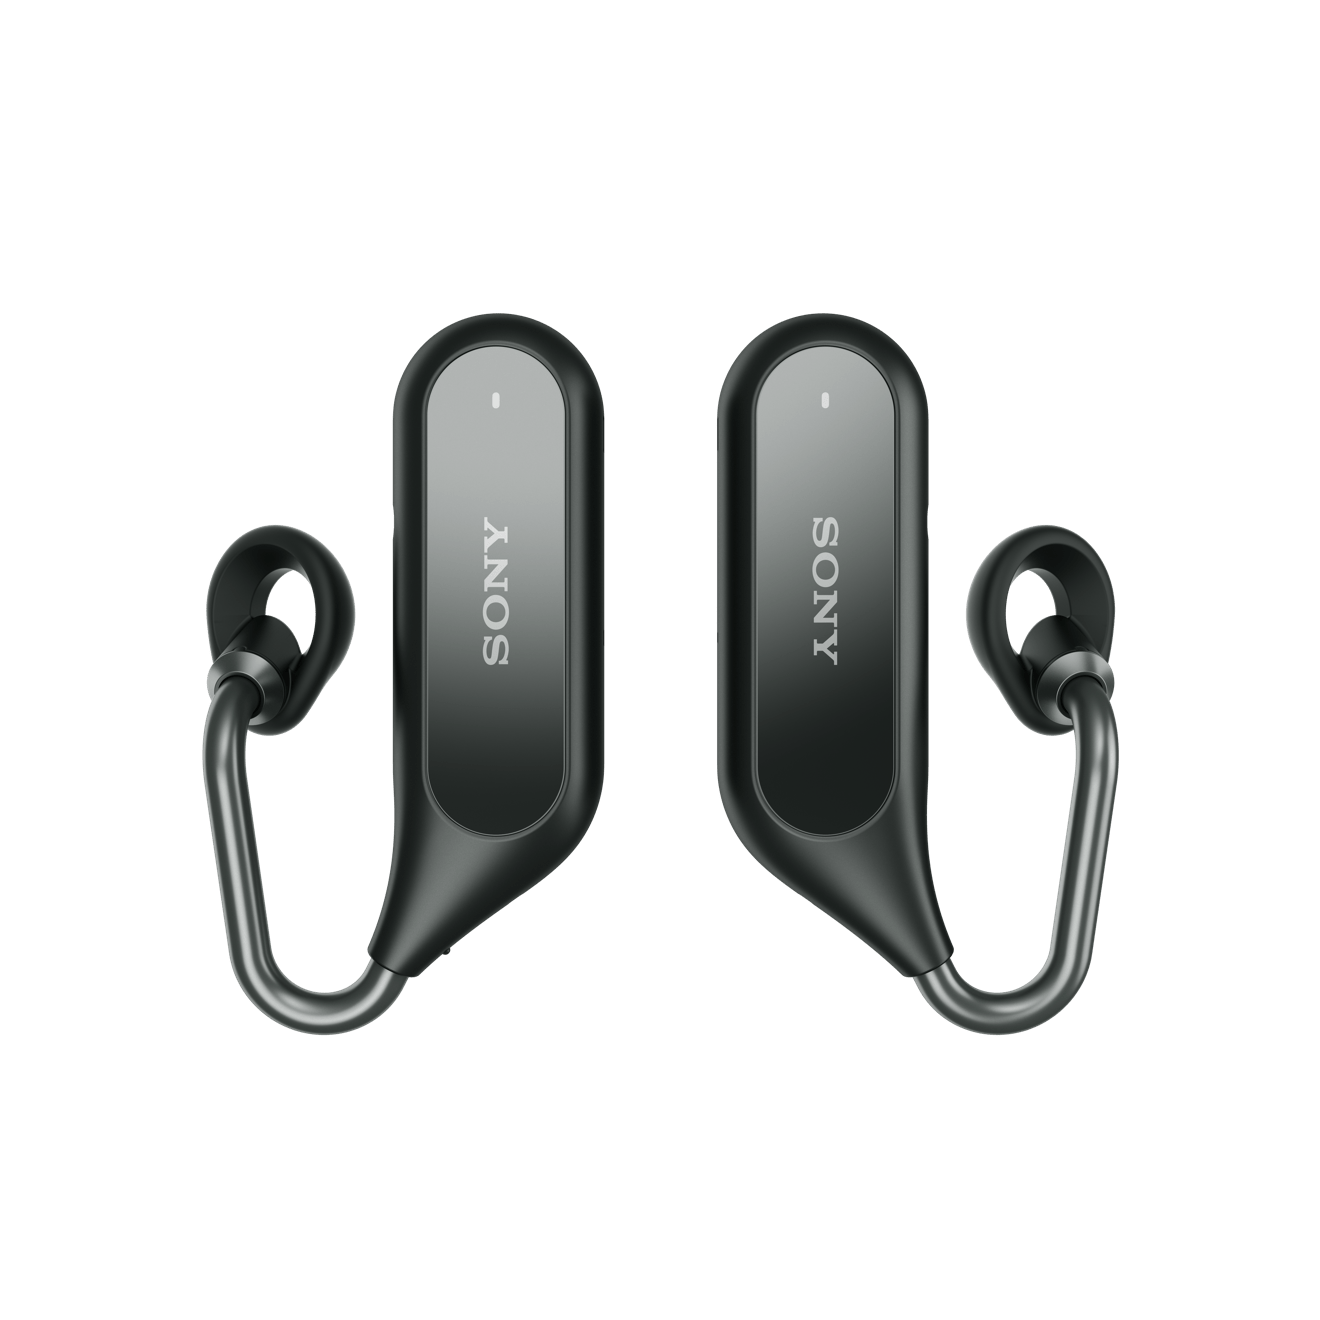 Sony’s Xperia Ear Duo